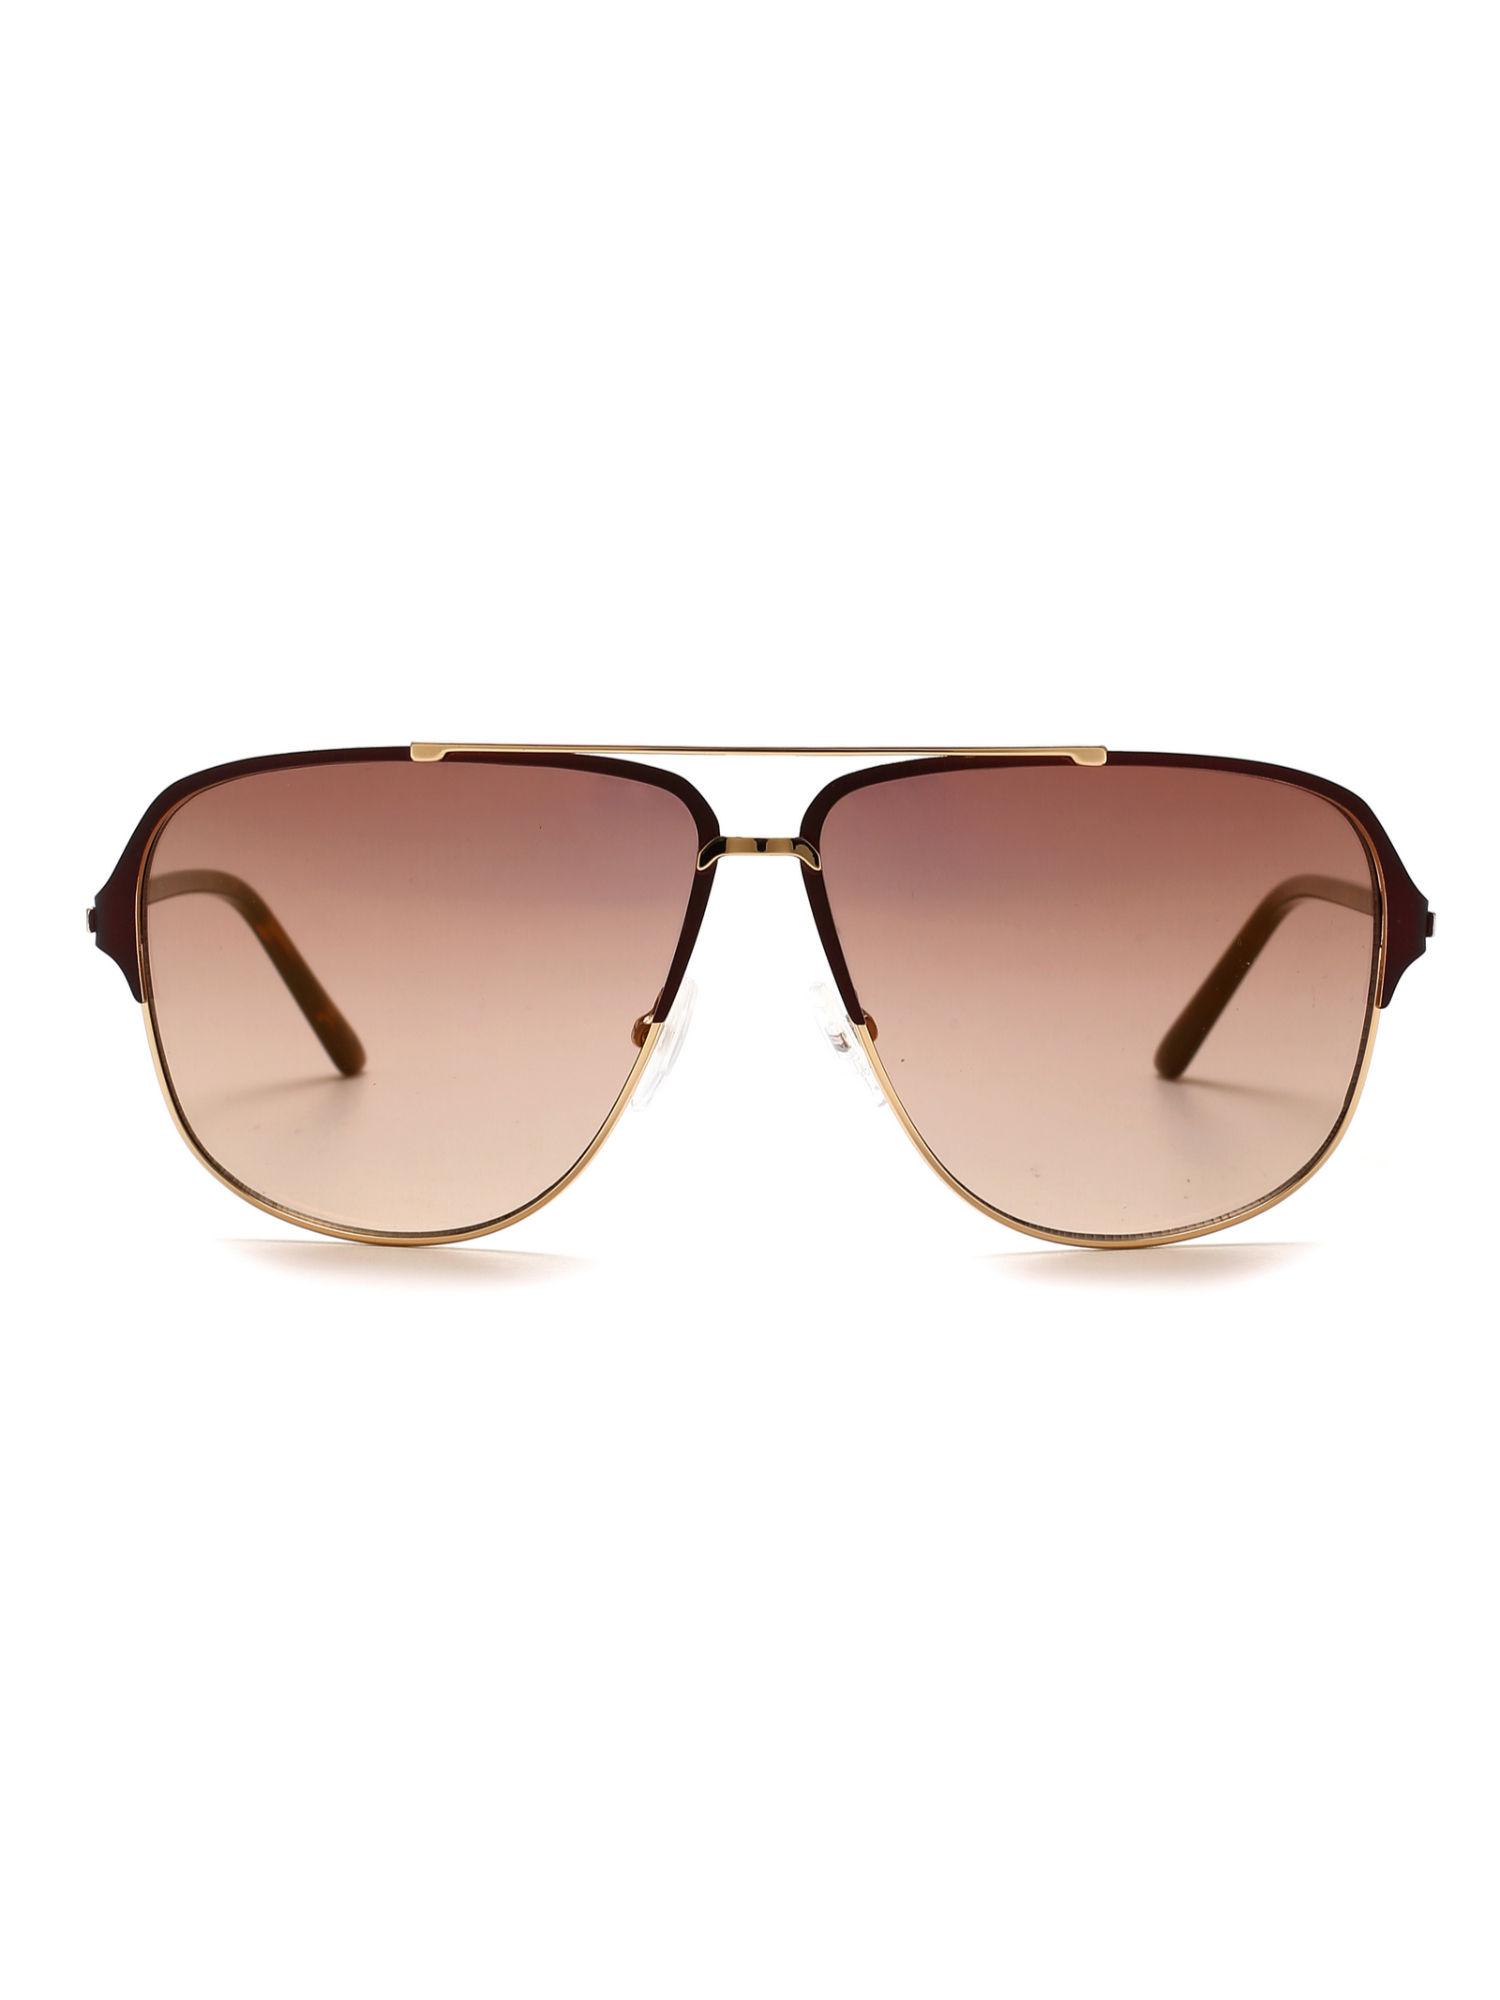 navigator sunglasses with brown lens for men